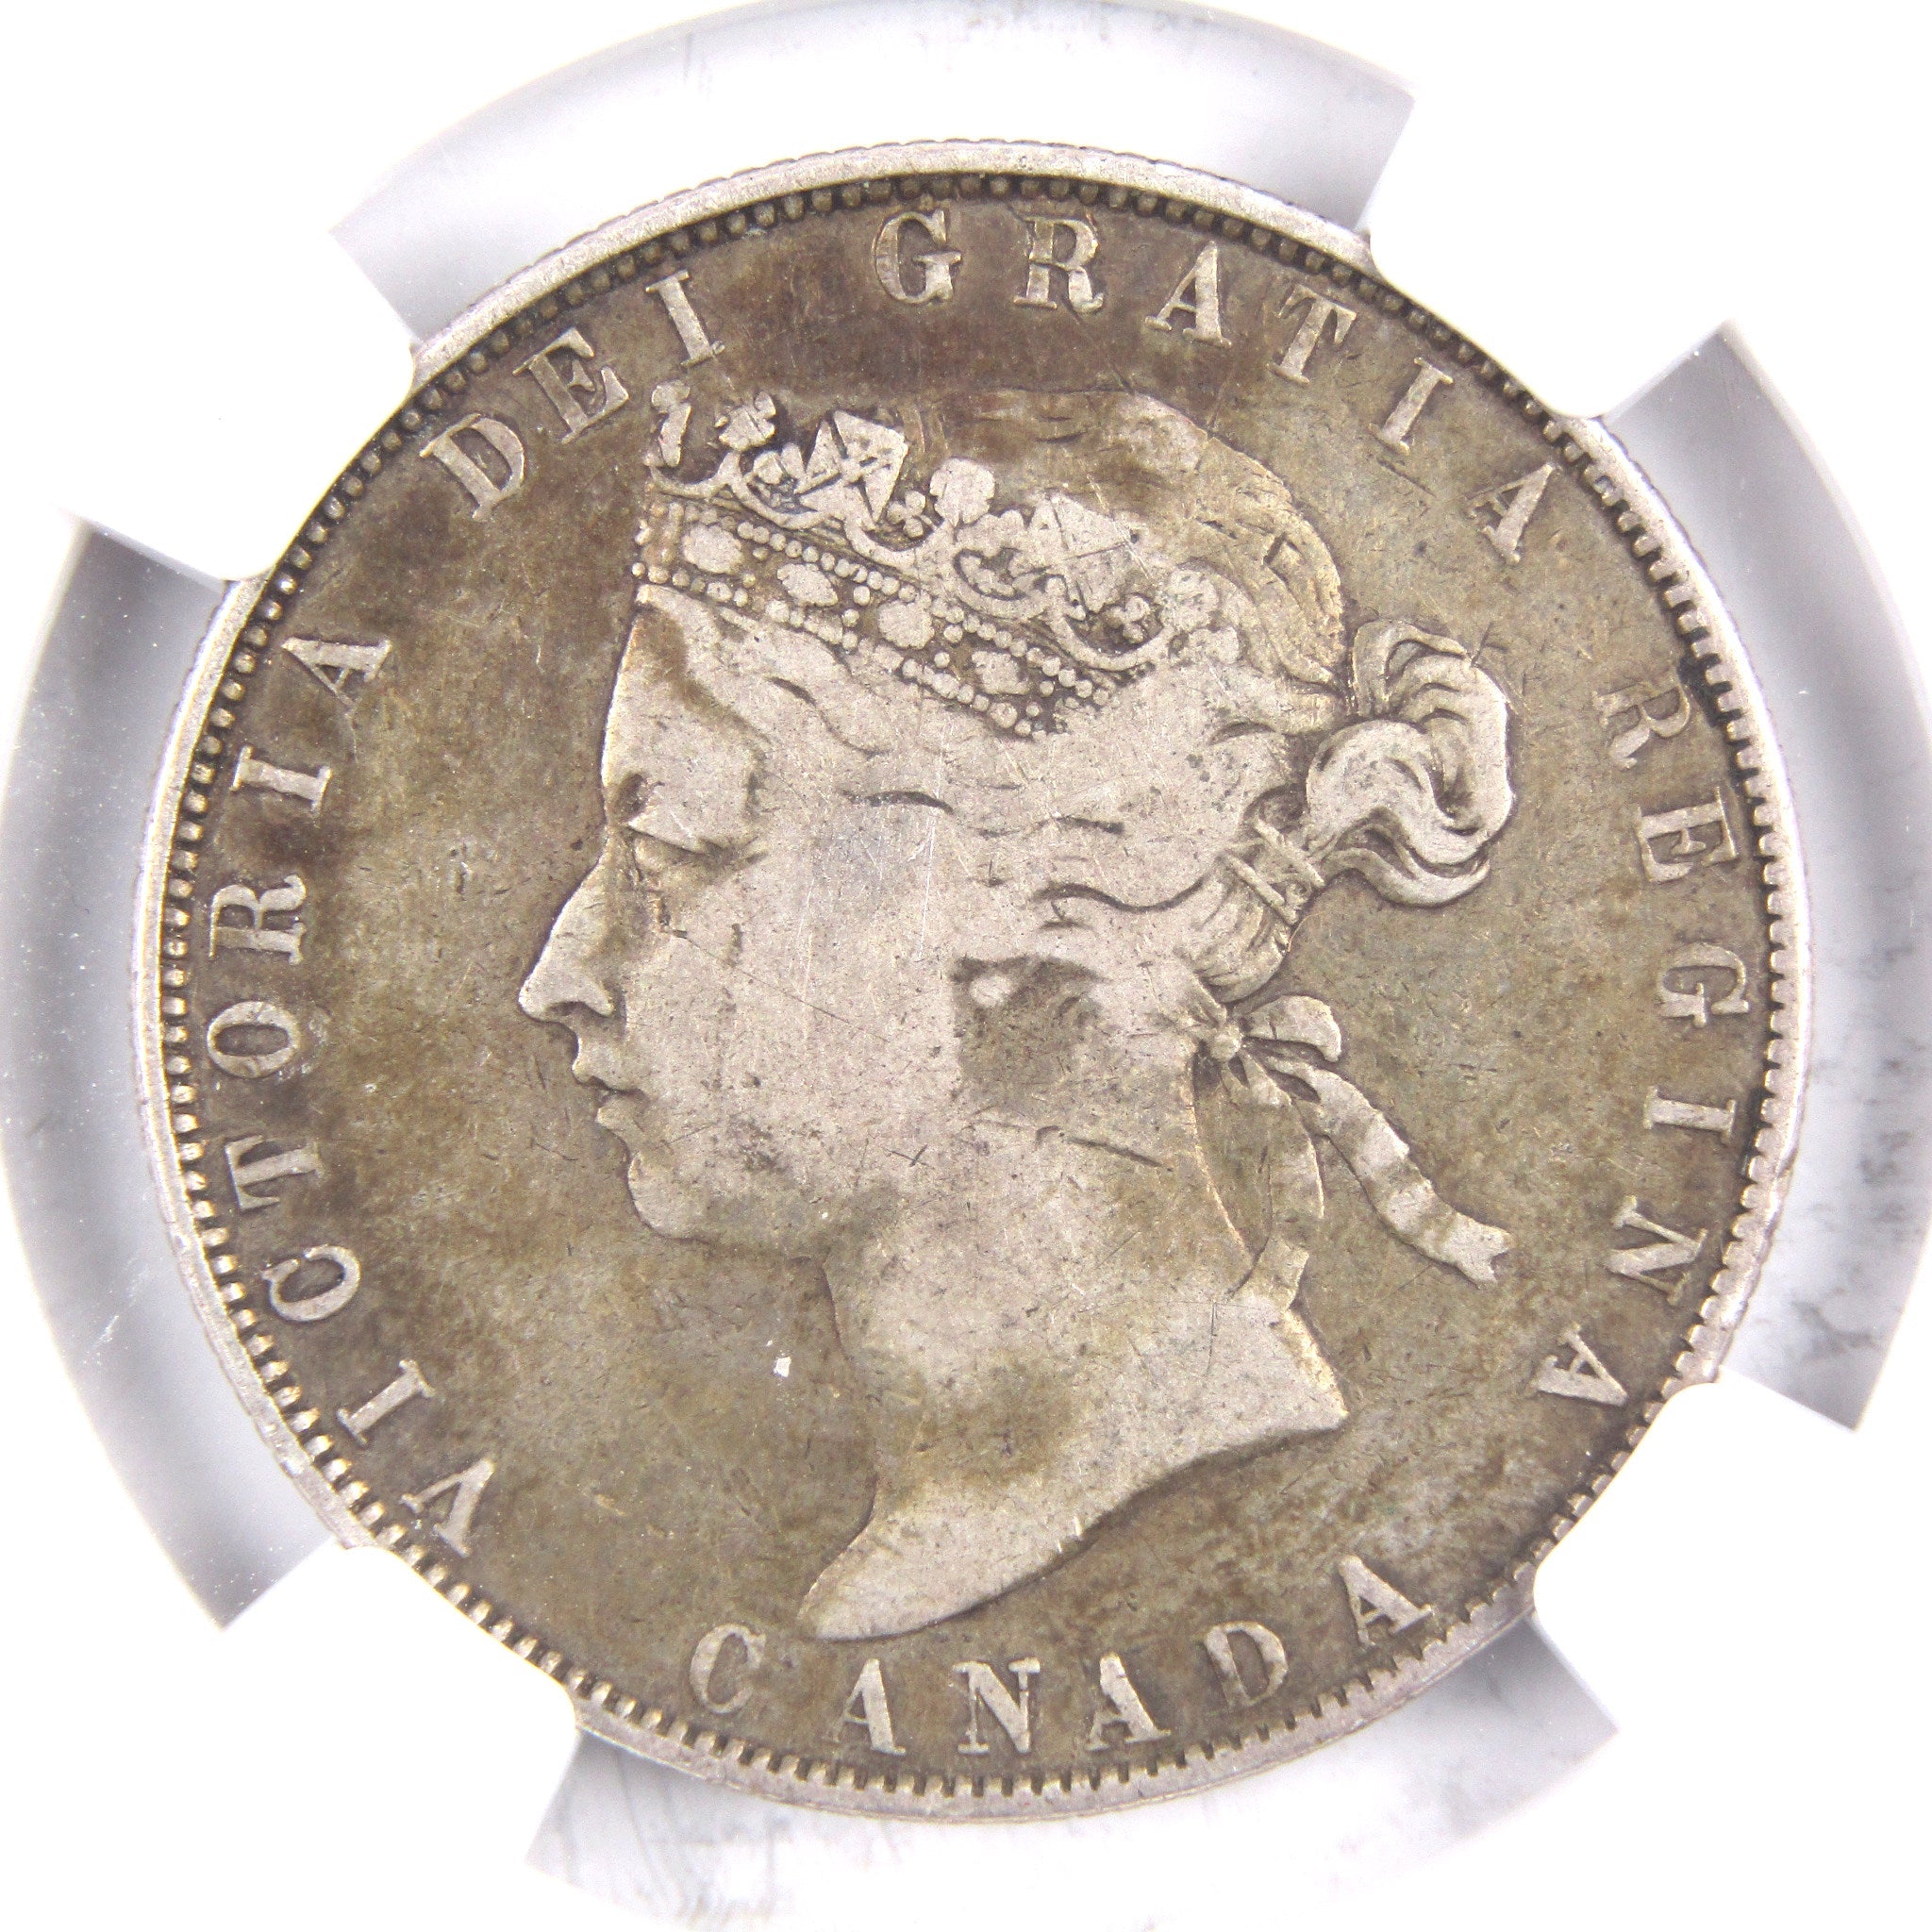 1870 Victoria 50 Cents No L.C.W. F 15 NGC Silver Canadian SKU:CPC2452